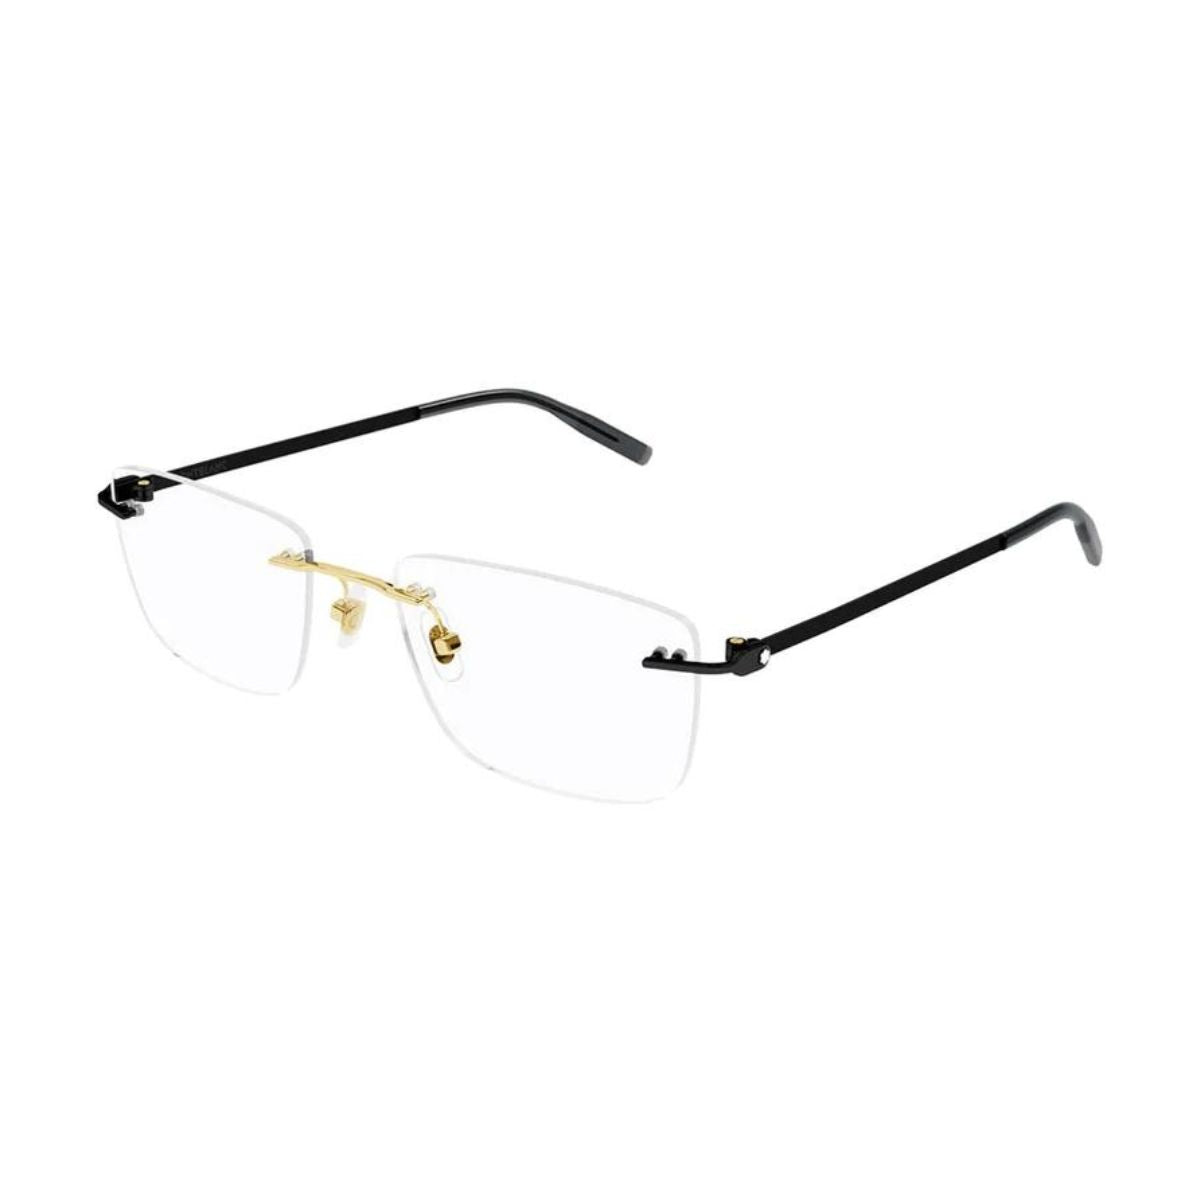 "Montblanc 0281O 001 prescription eyeglasses frame for men's at optorium"